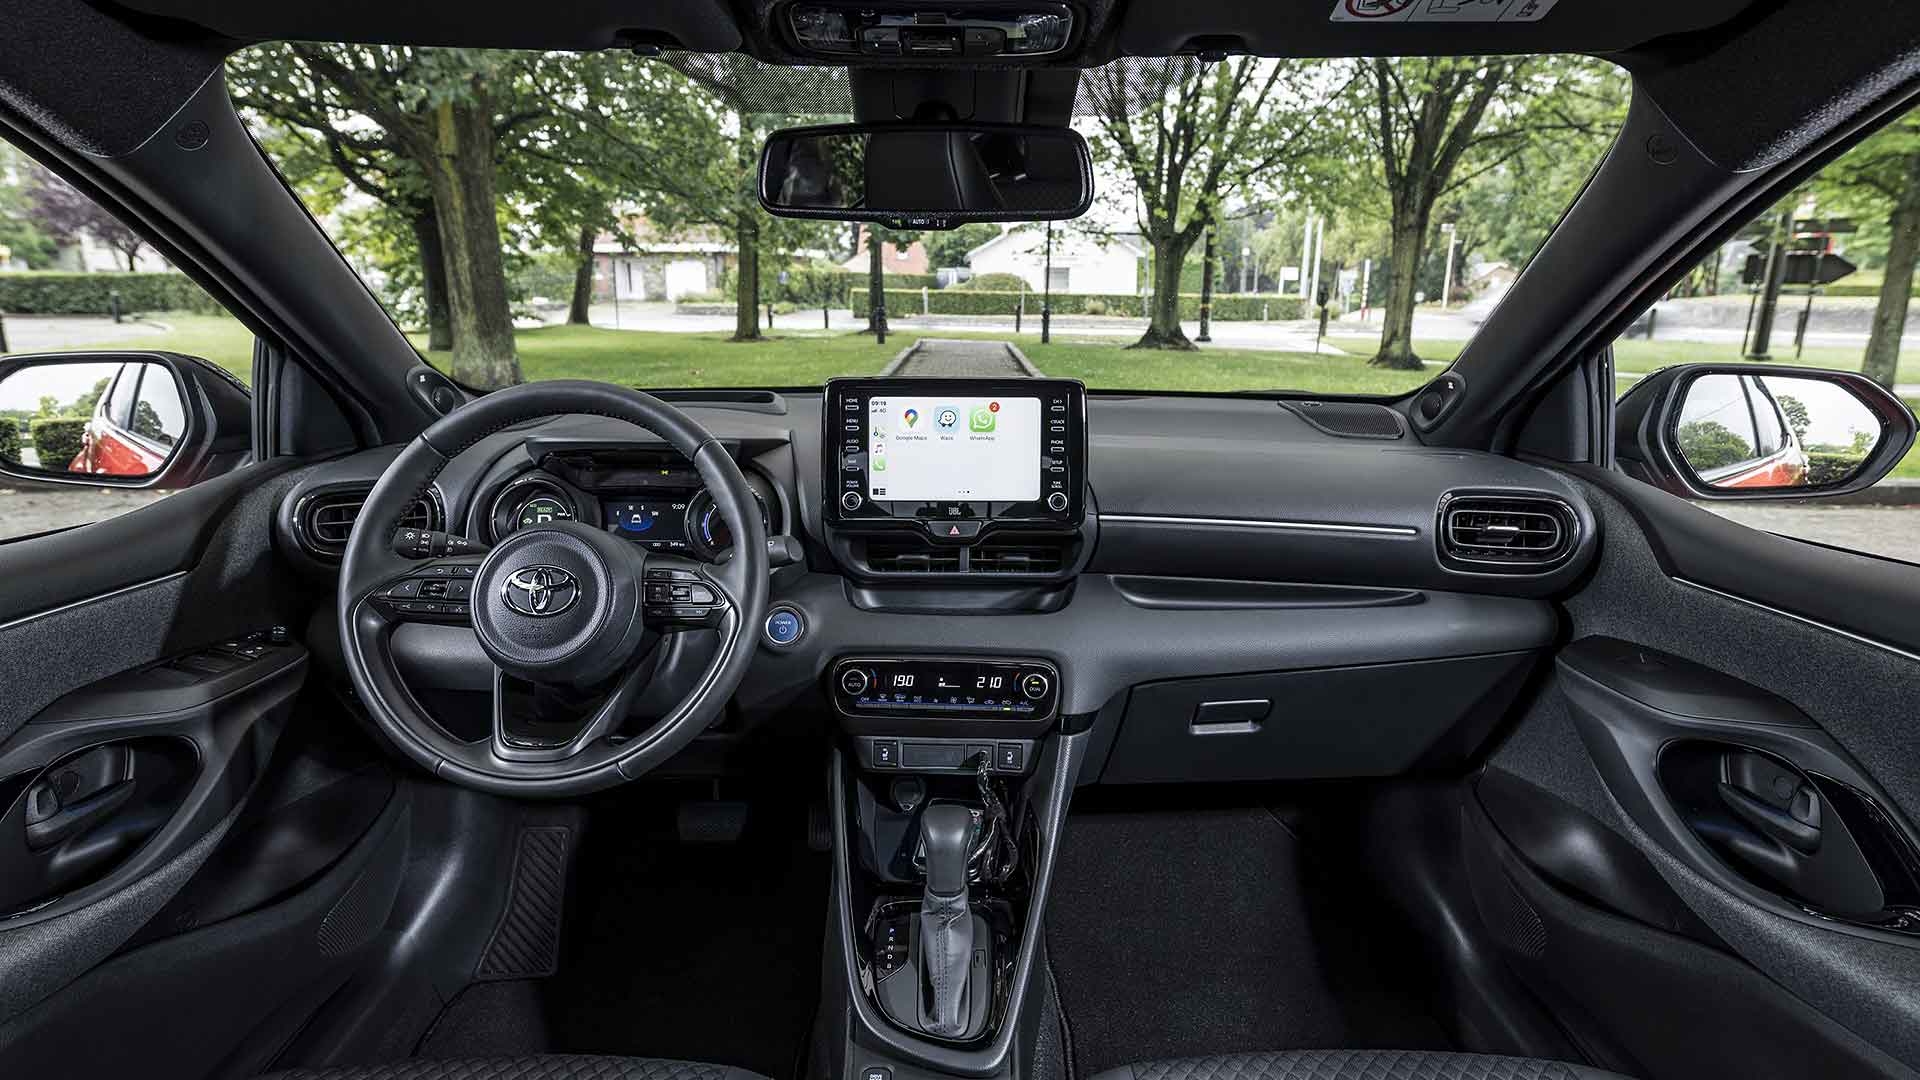 Toyota Yaris interior